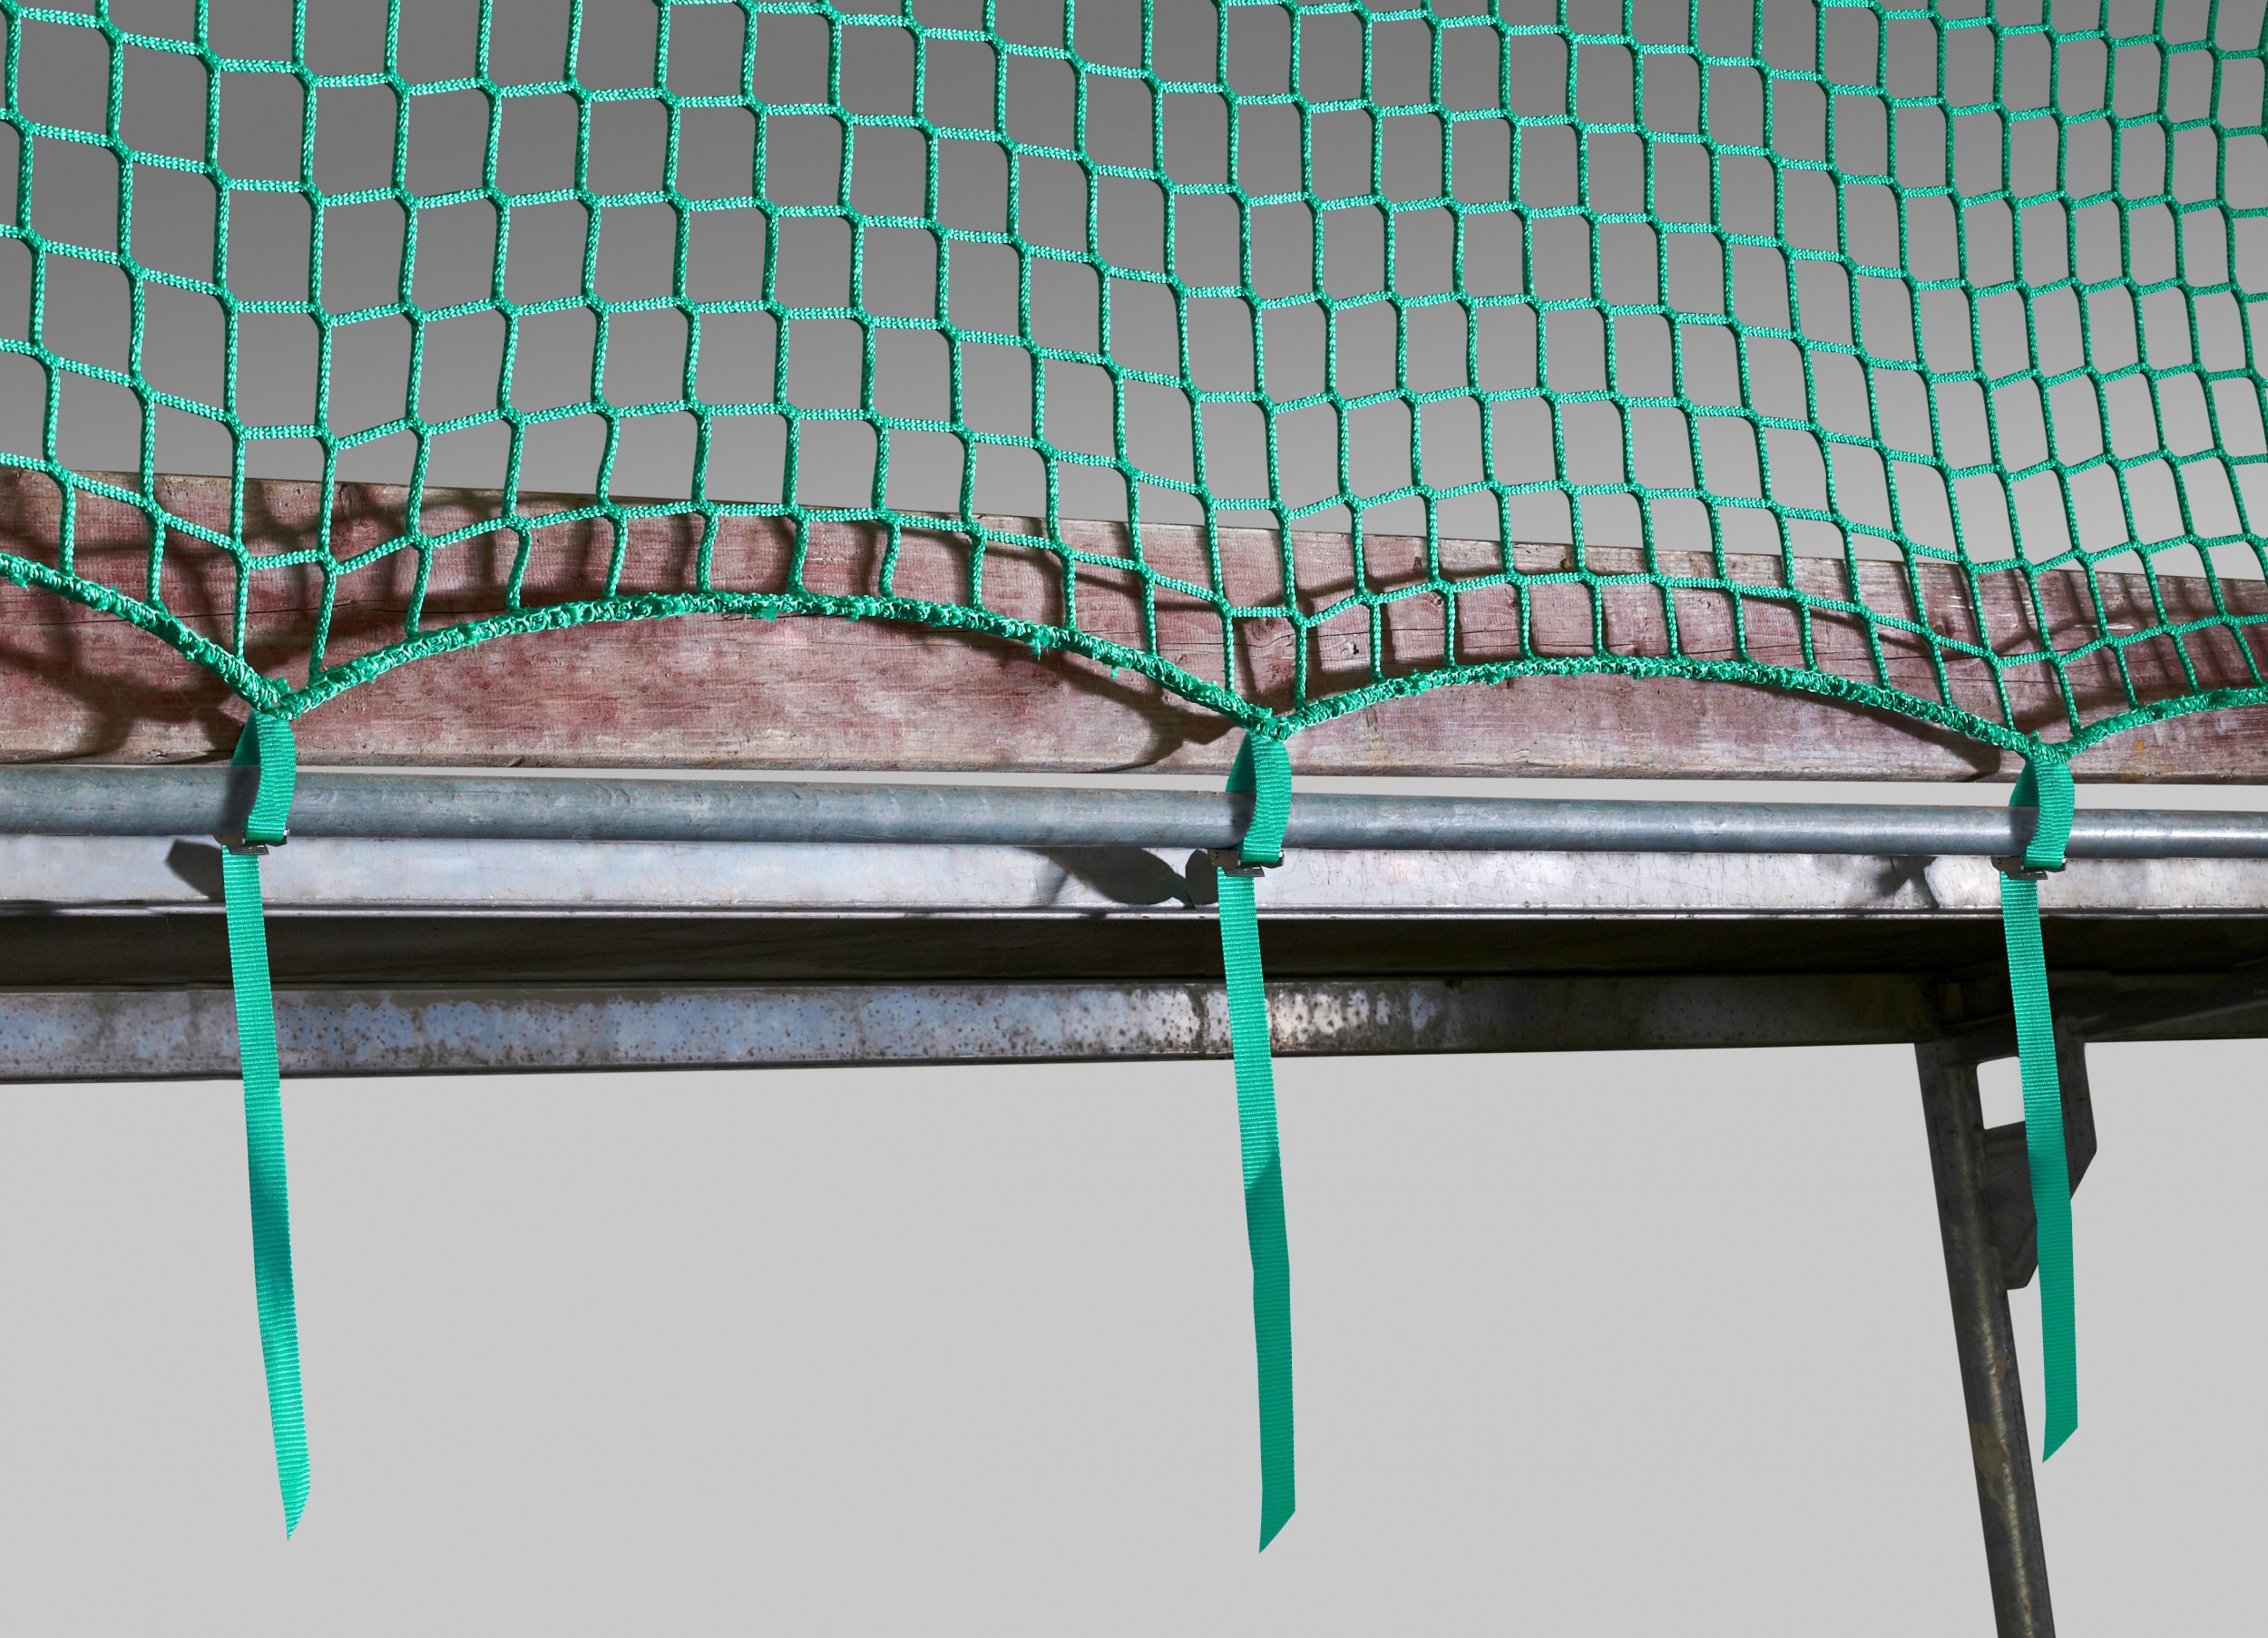 Seitenschutznetz - Dachdeckerfangnetz - Fangnetz- MIT GSV - 2x10m und 2x5m  Farbe 2 x 10 m, mit GSV, Farbe: grün